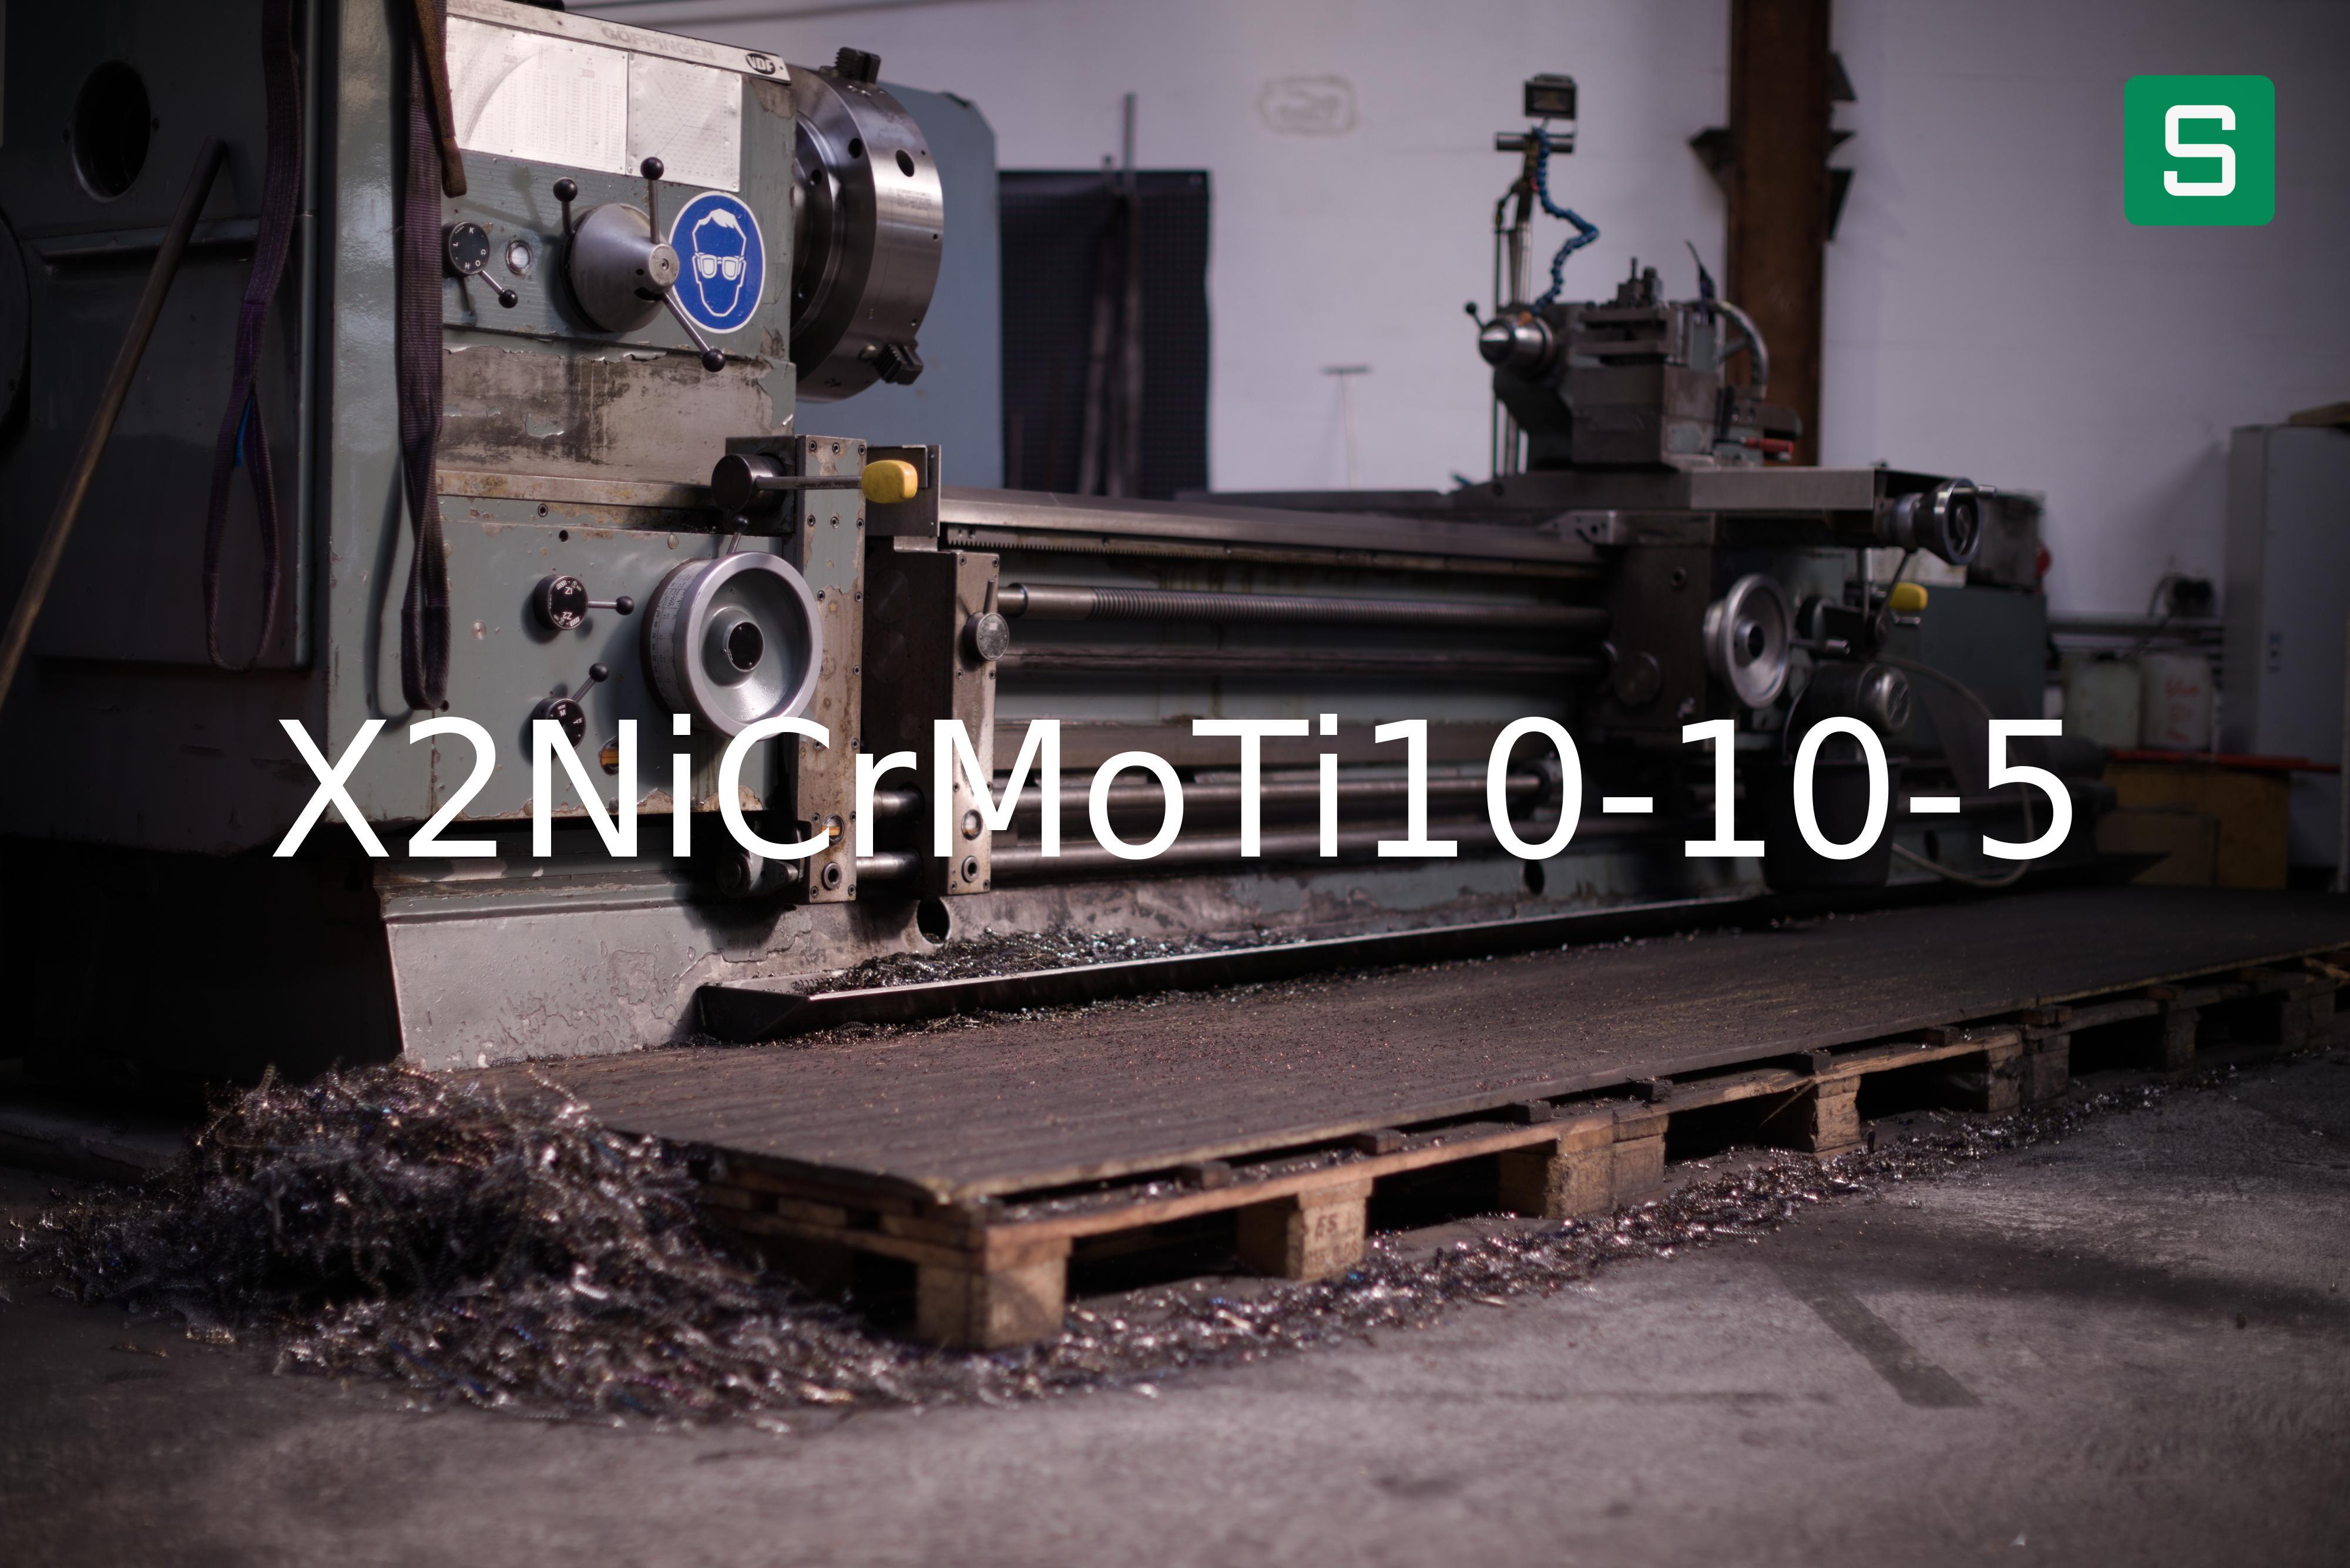 Steel Material: X2NiCrMoTi10-10-5